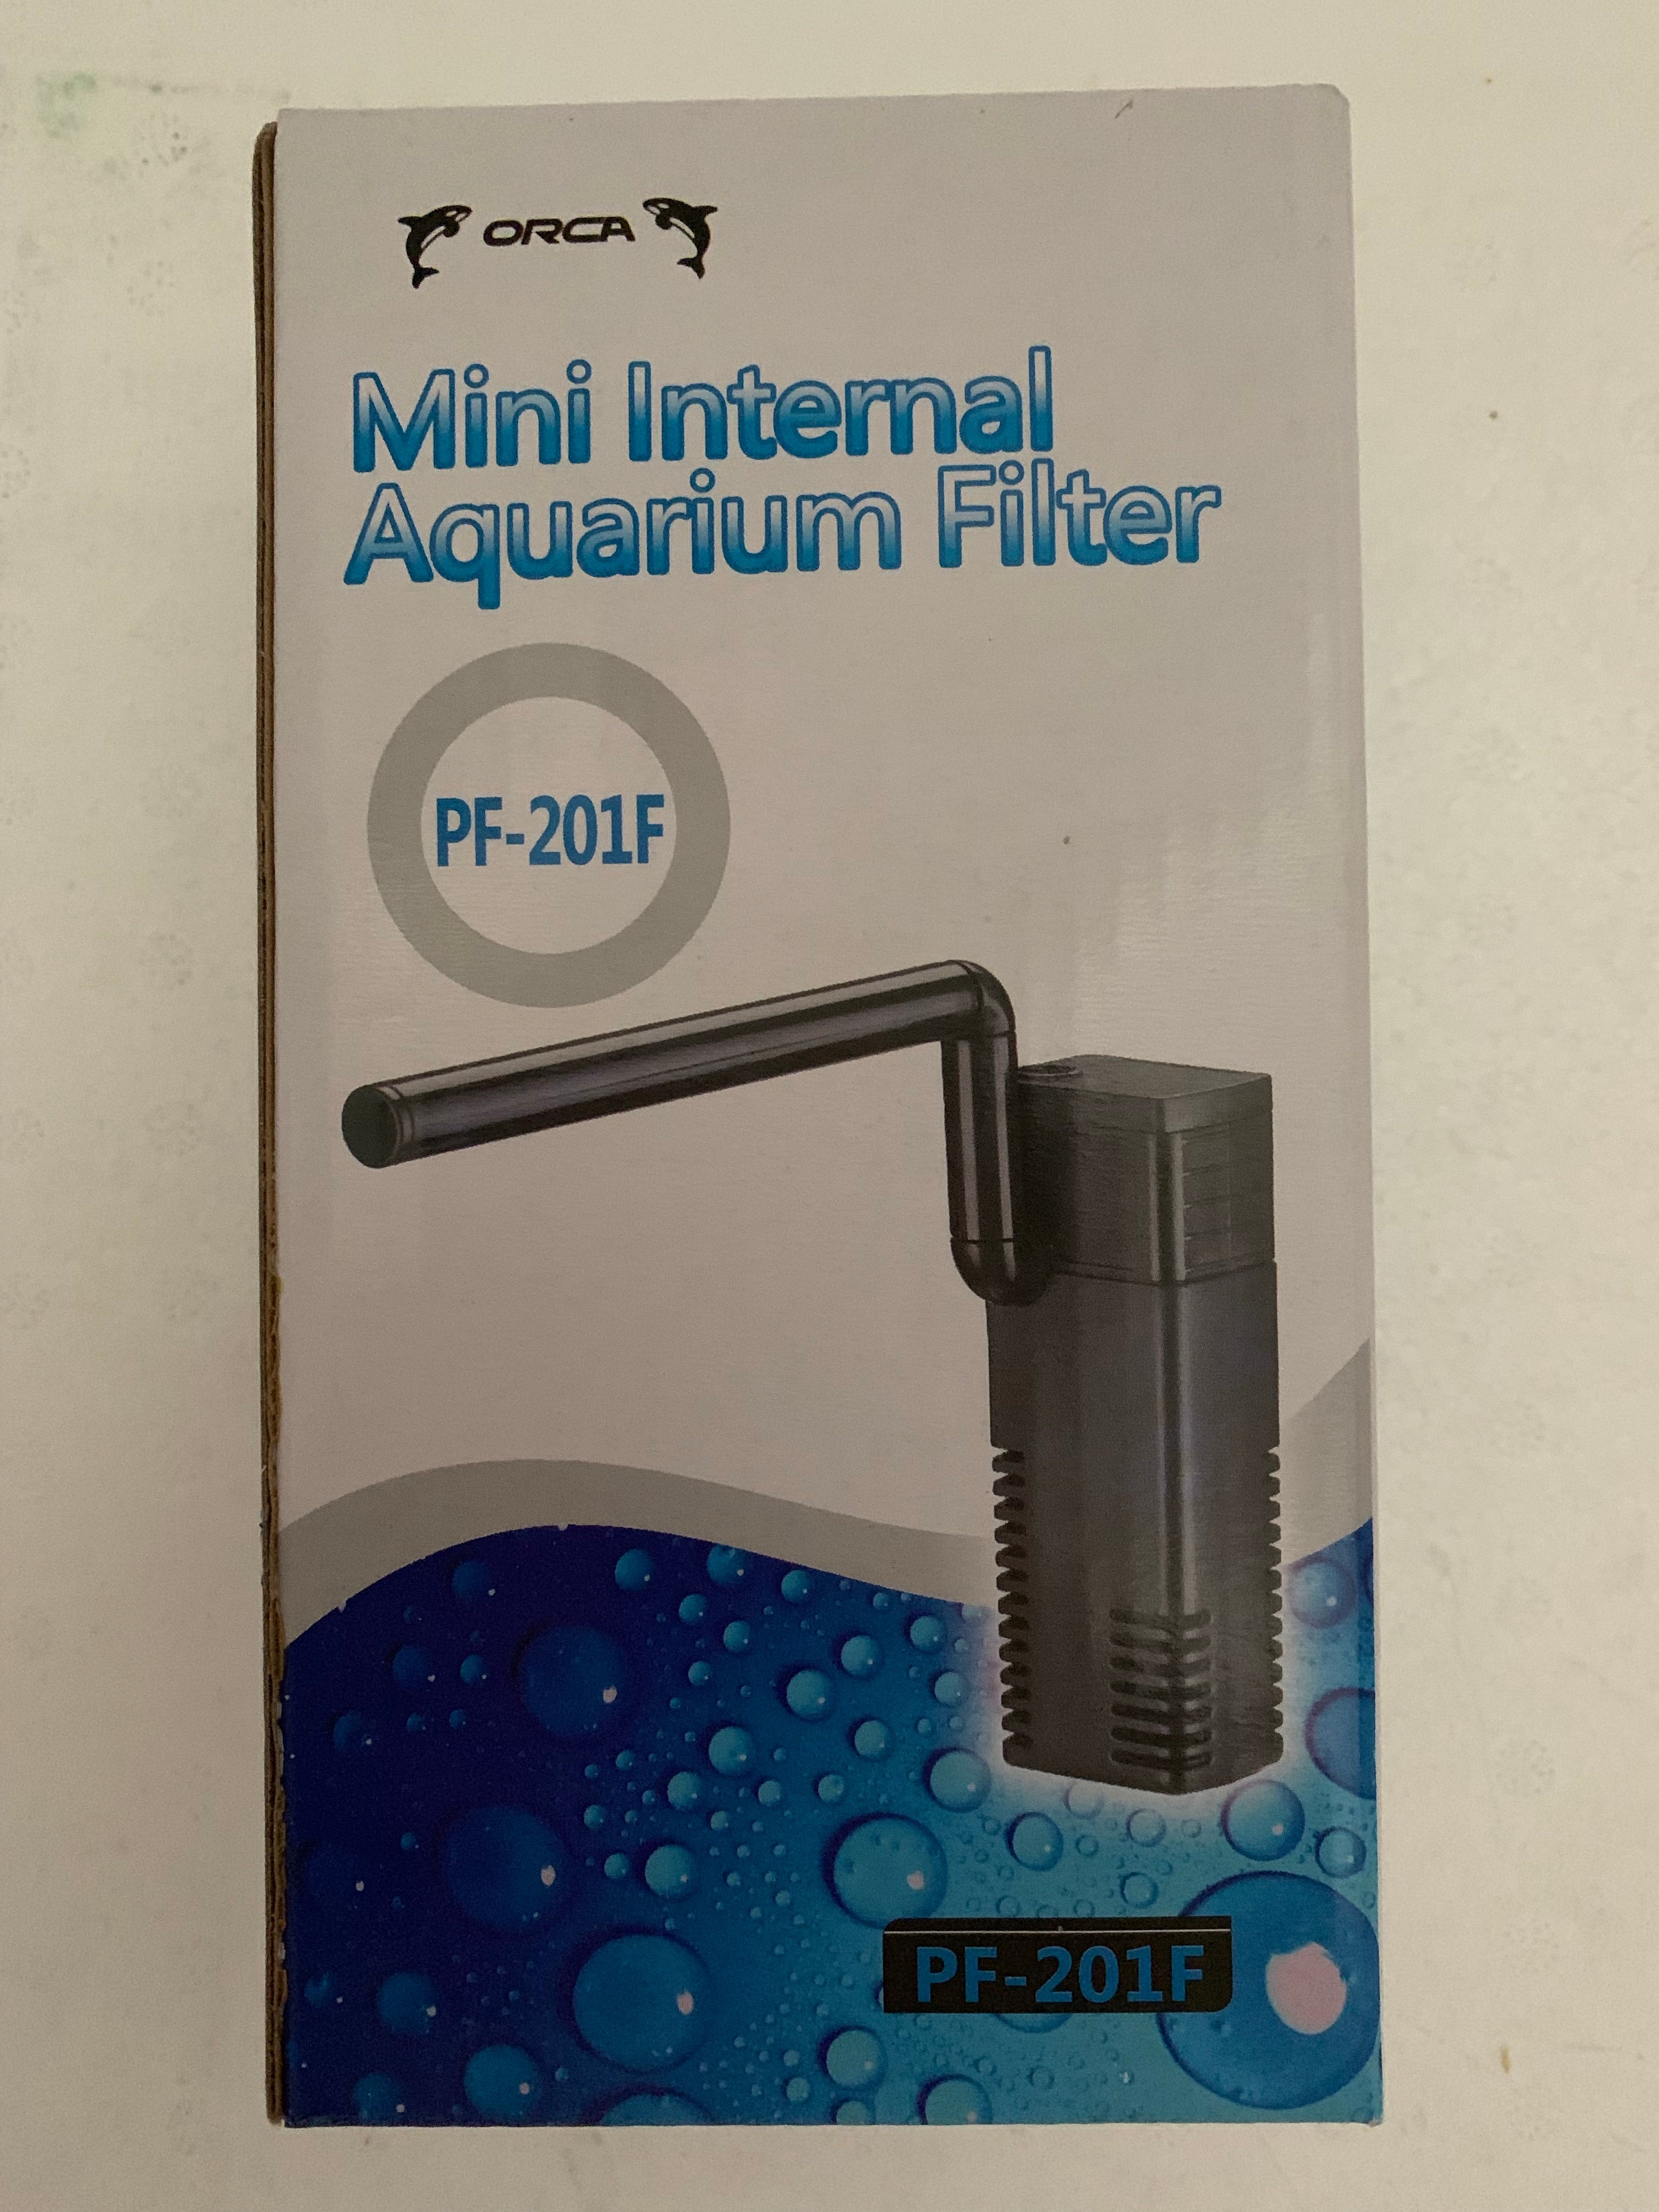 Mini Internal Aquarium Filter